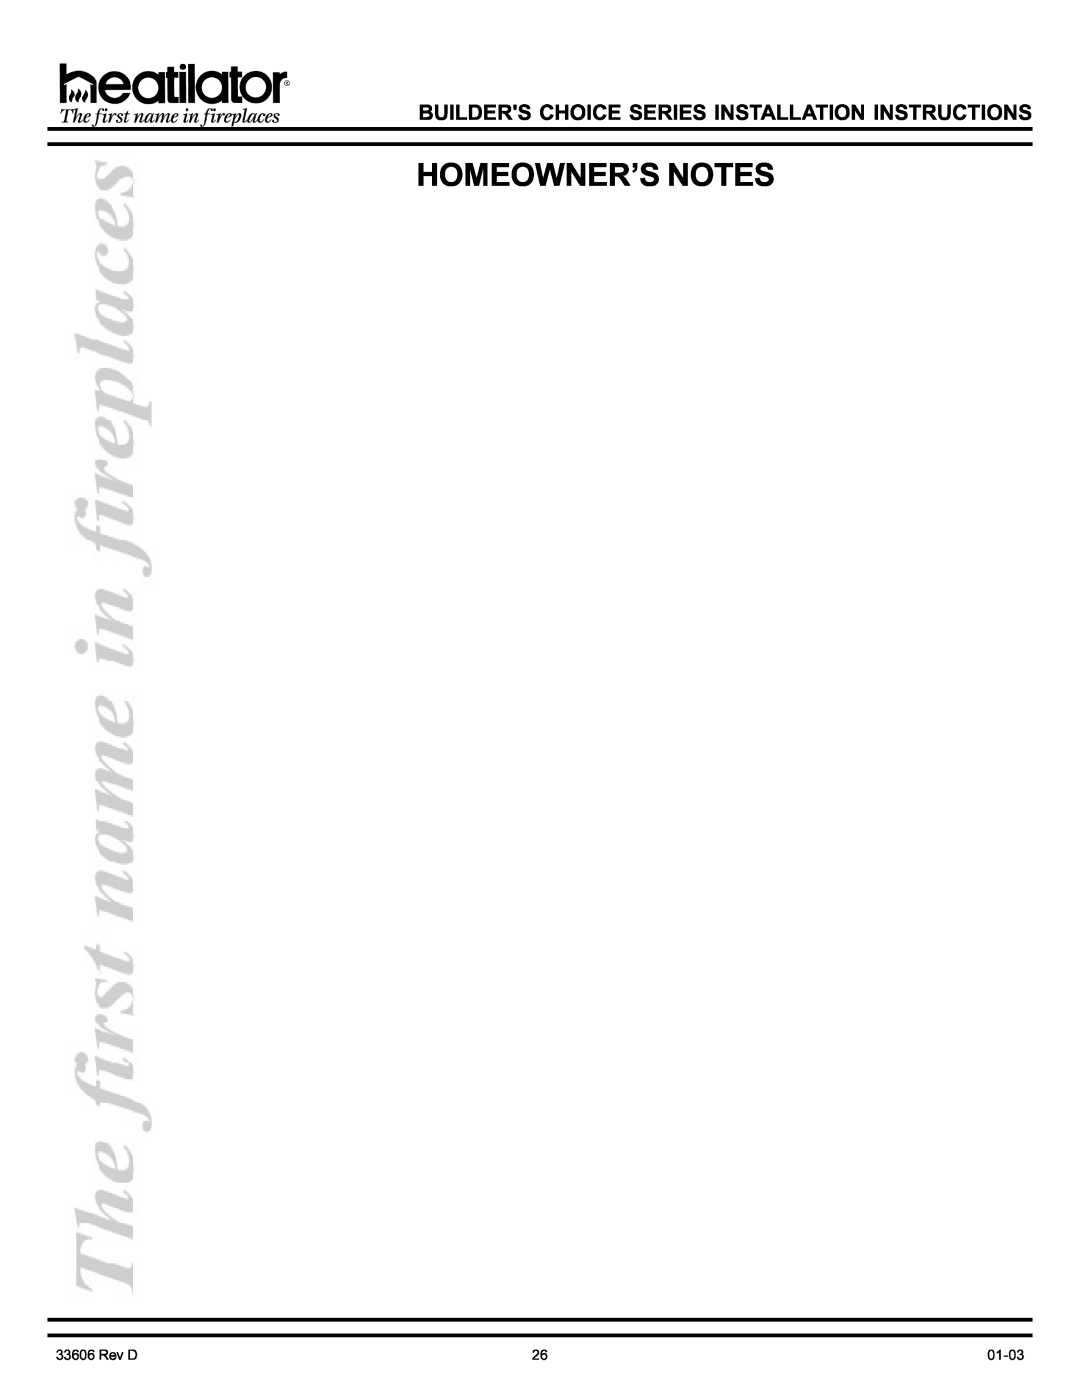 Heatiator BCDV36 manual Homeowner’S Notes, Builders Choice Series Installation Instructions, Rev D, 01-03 